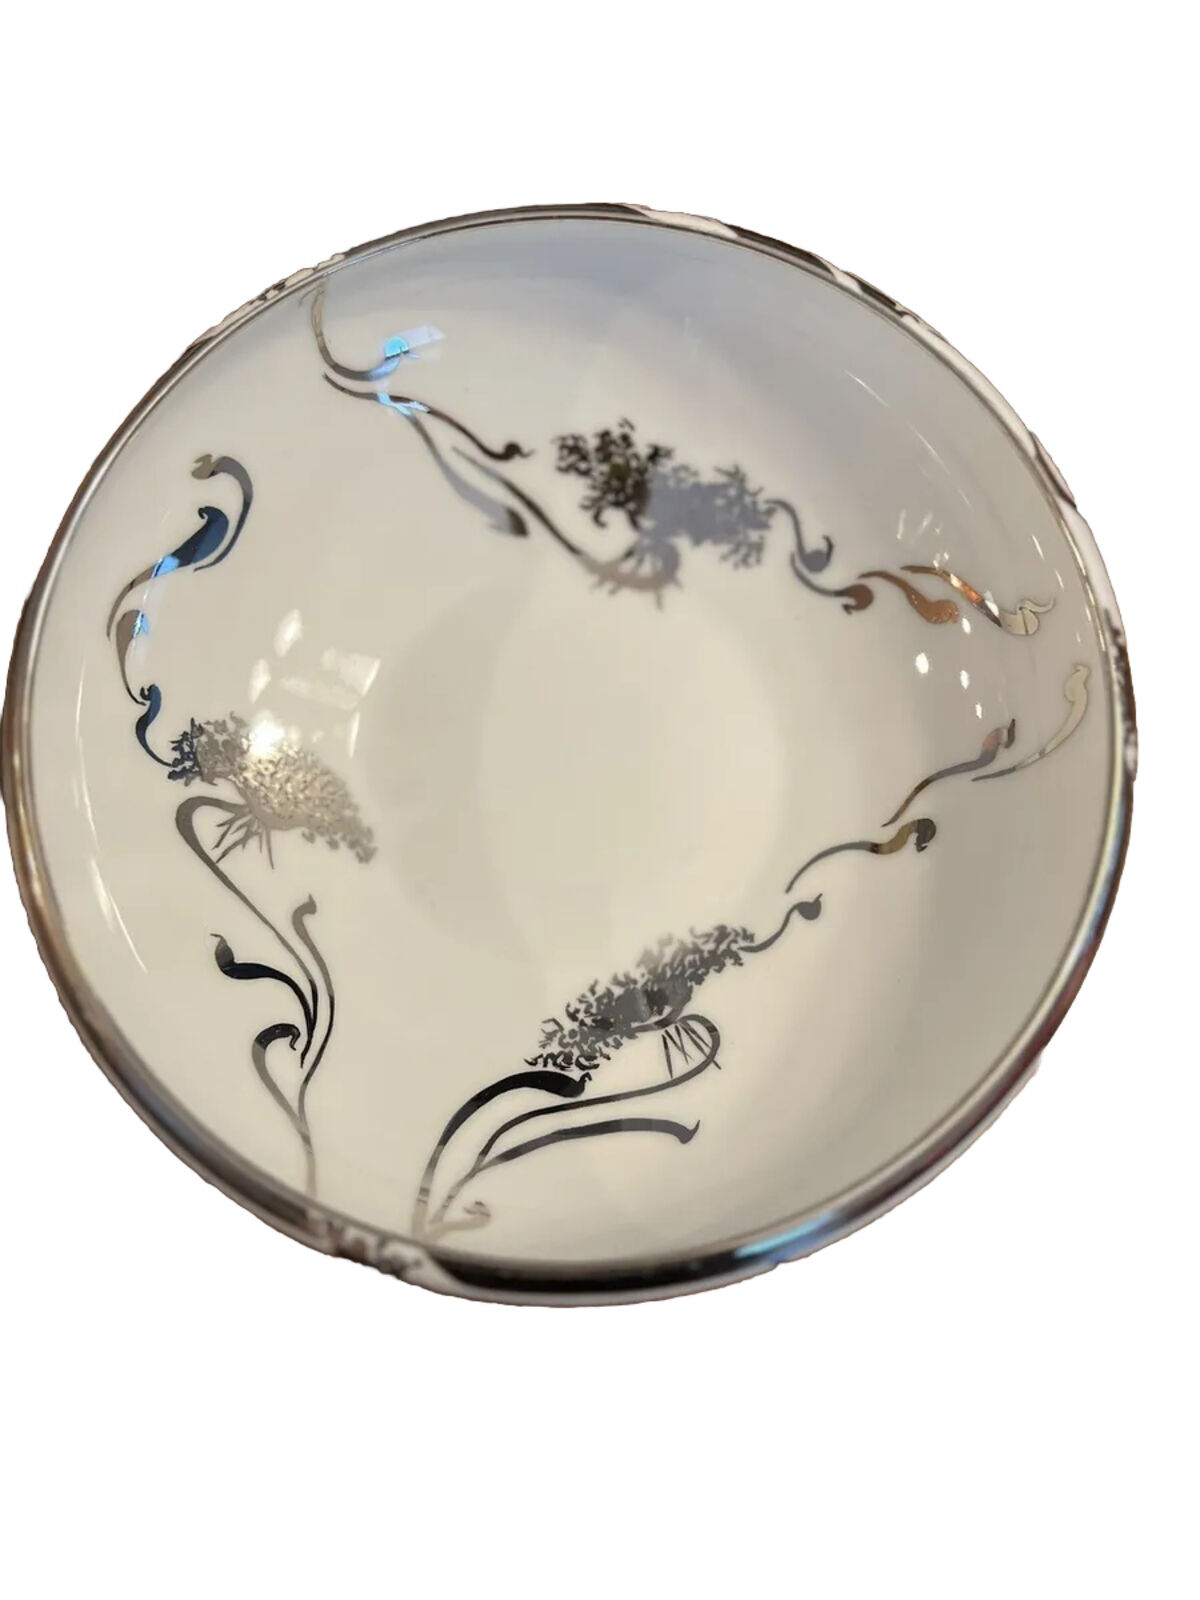 Decorative Porcelain Bowl With Silver Trim Design Signed